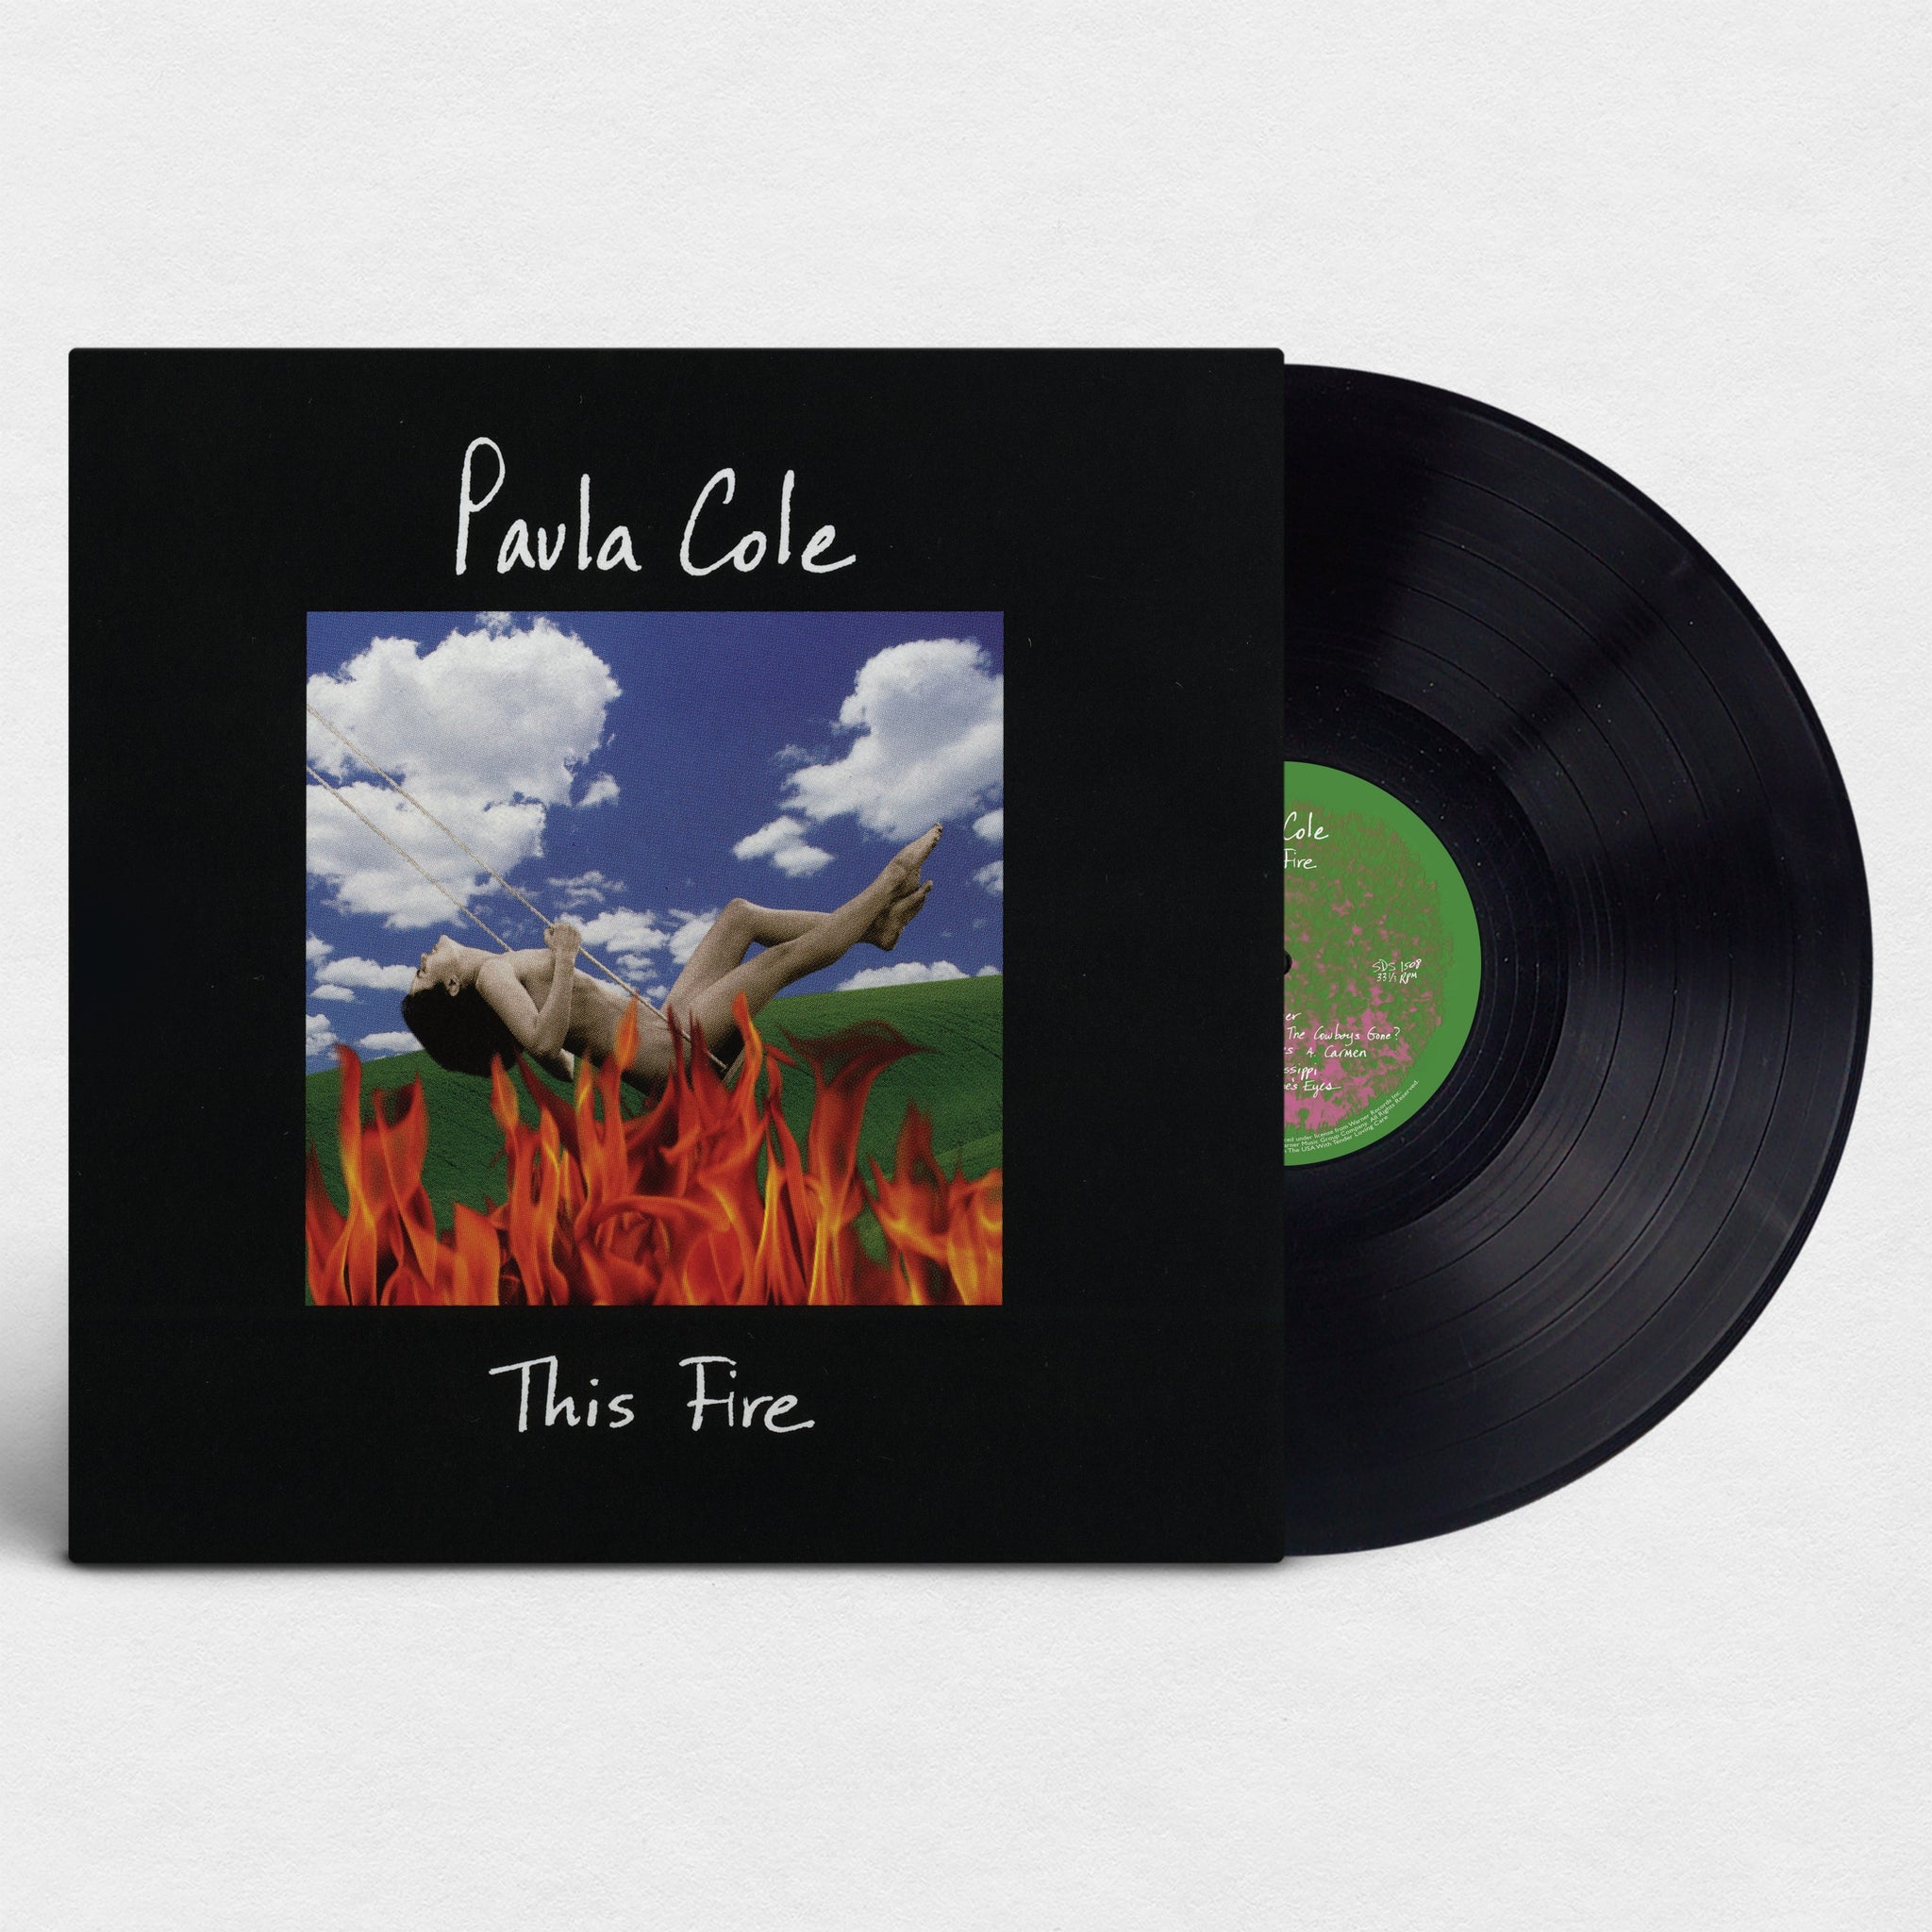 Paula Cole "This Fire" - Black Vinyl [Ltd. quantities] Now Shipping